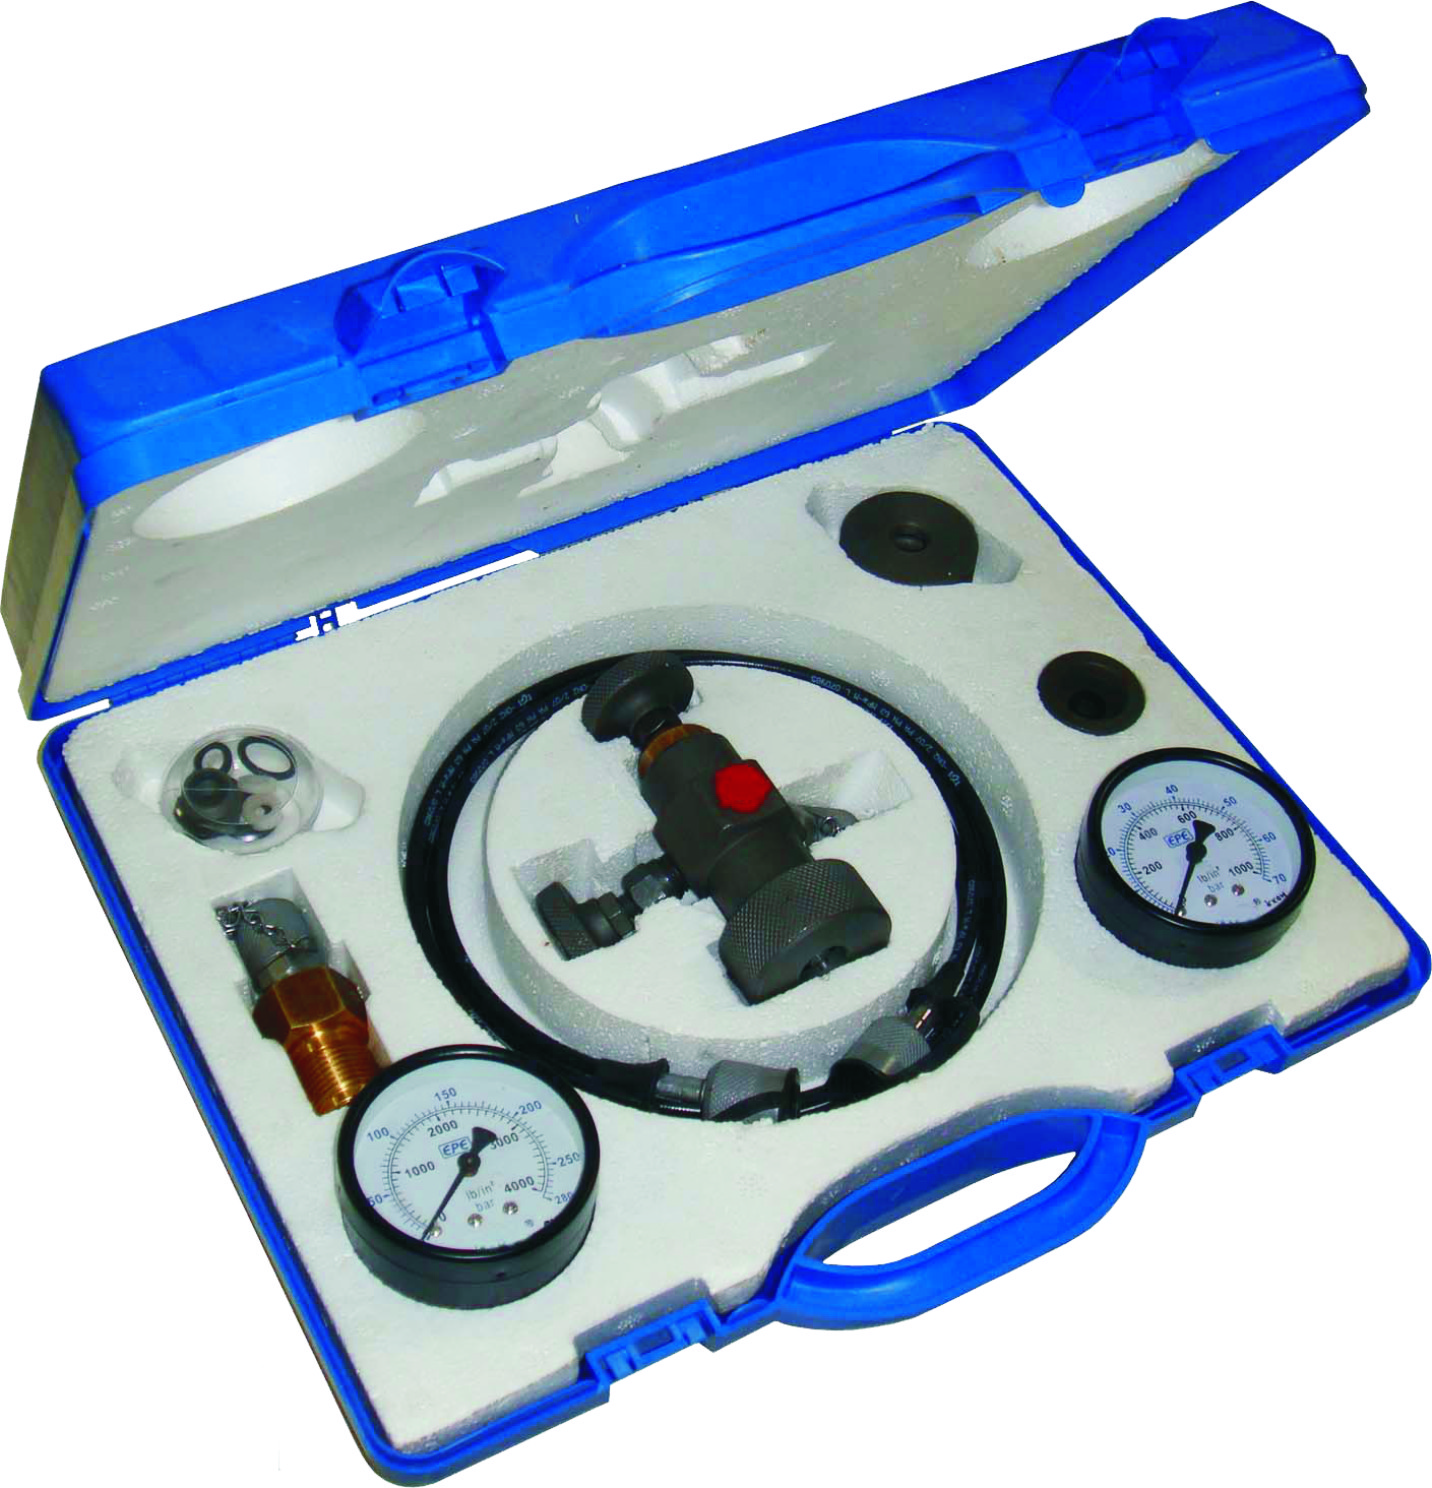 Accumulator Charging Kit Standard (for Bladder & Piston Type)